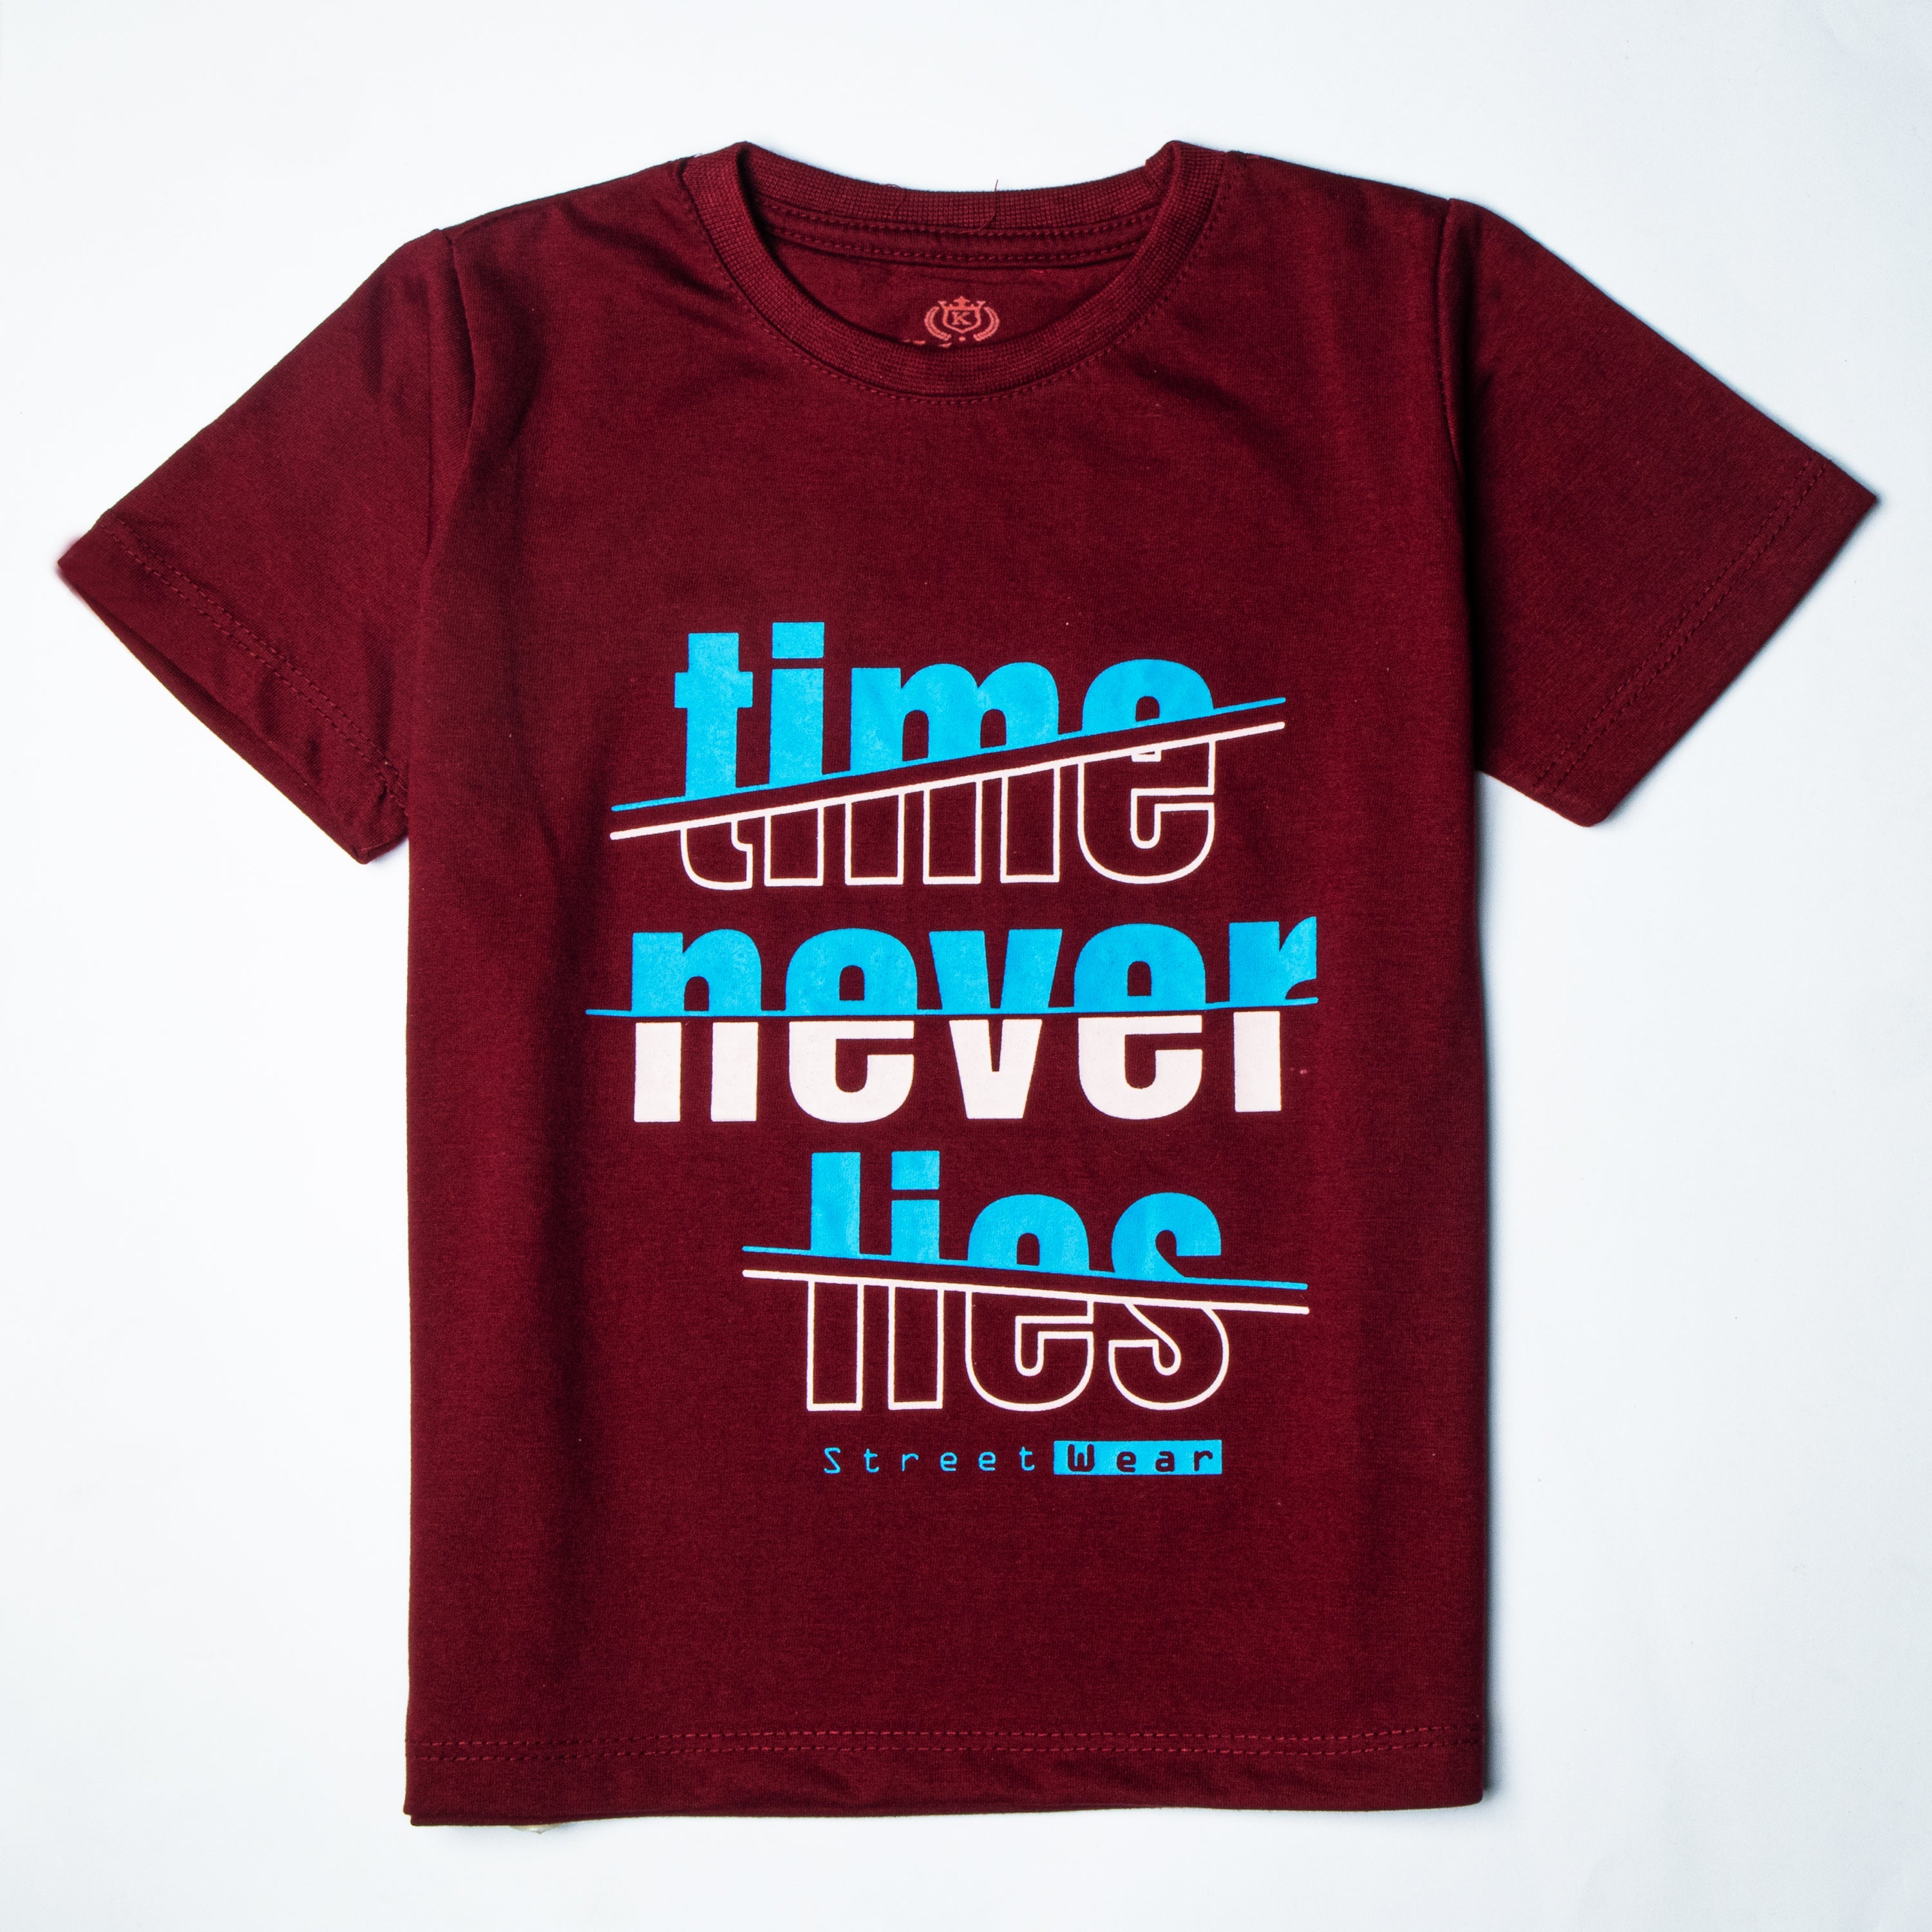 Boys Half Sleeves-Printed T-Shirt (Time)